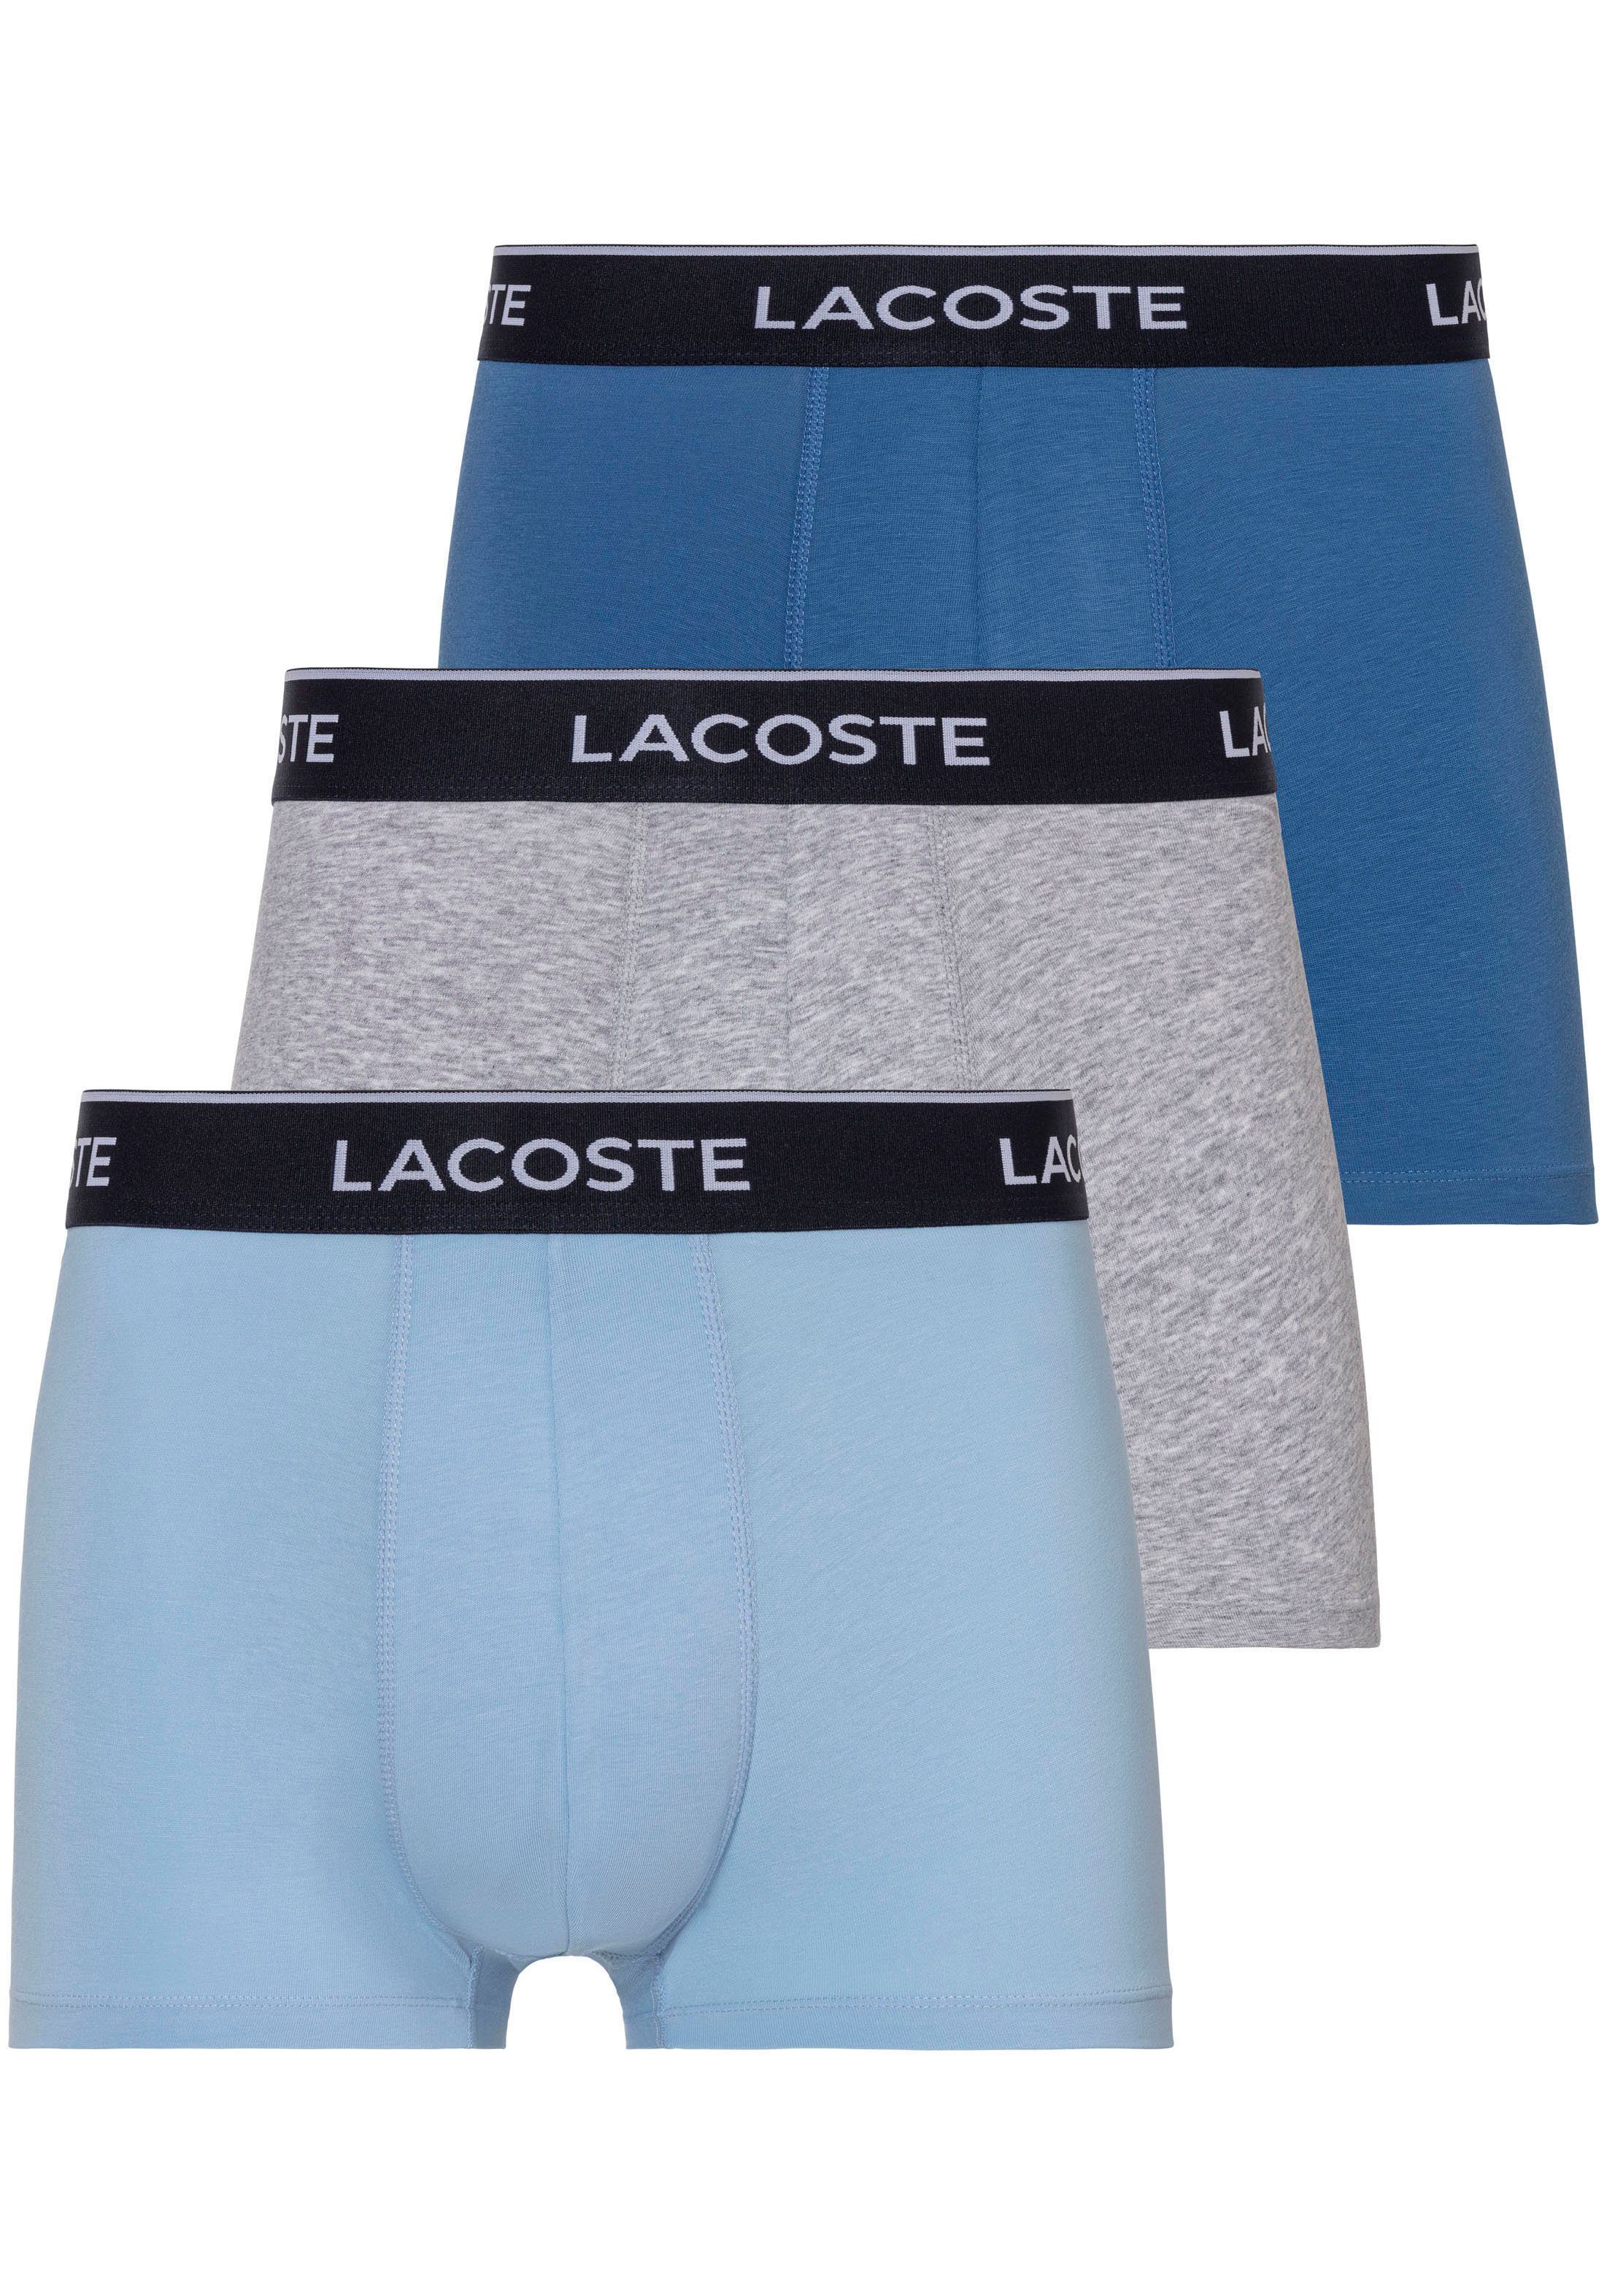 Lacoste Trunk eng Boxershorts Lacoste Herren Premium (Packung, 3-St., 3er-Pack) aus atmungsaktivem Material grau-blau-hb